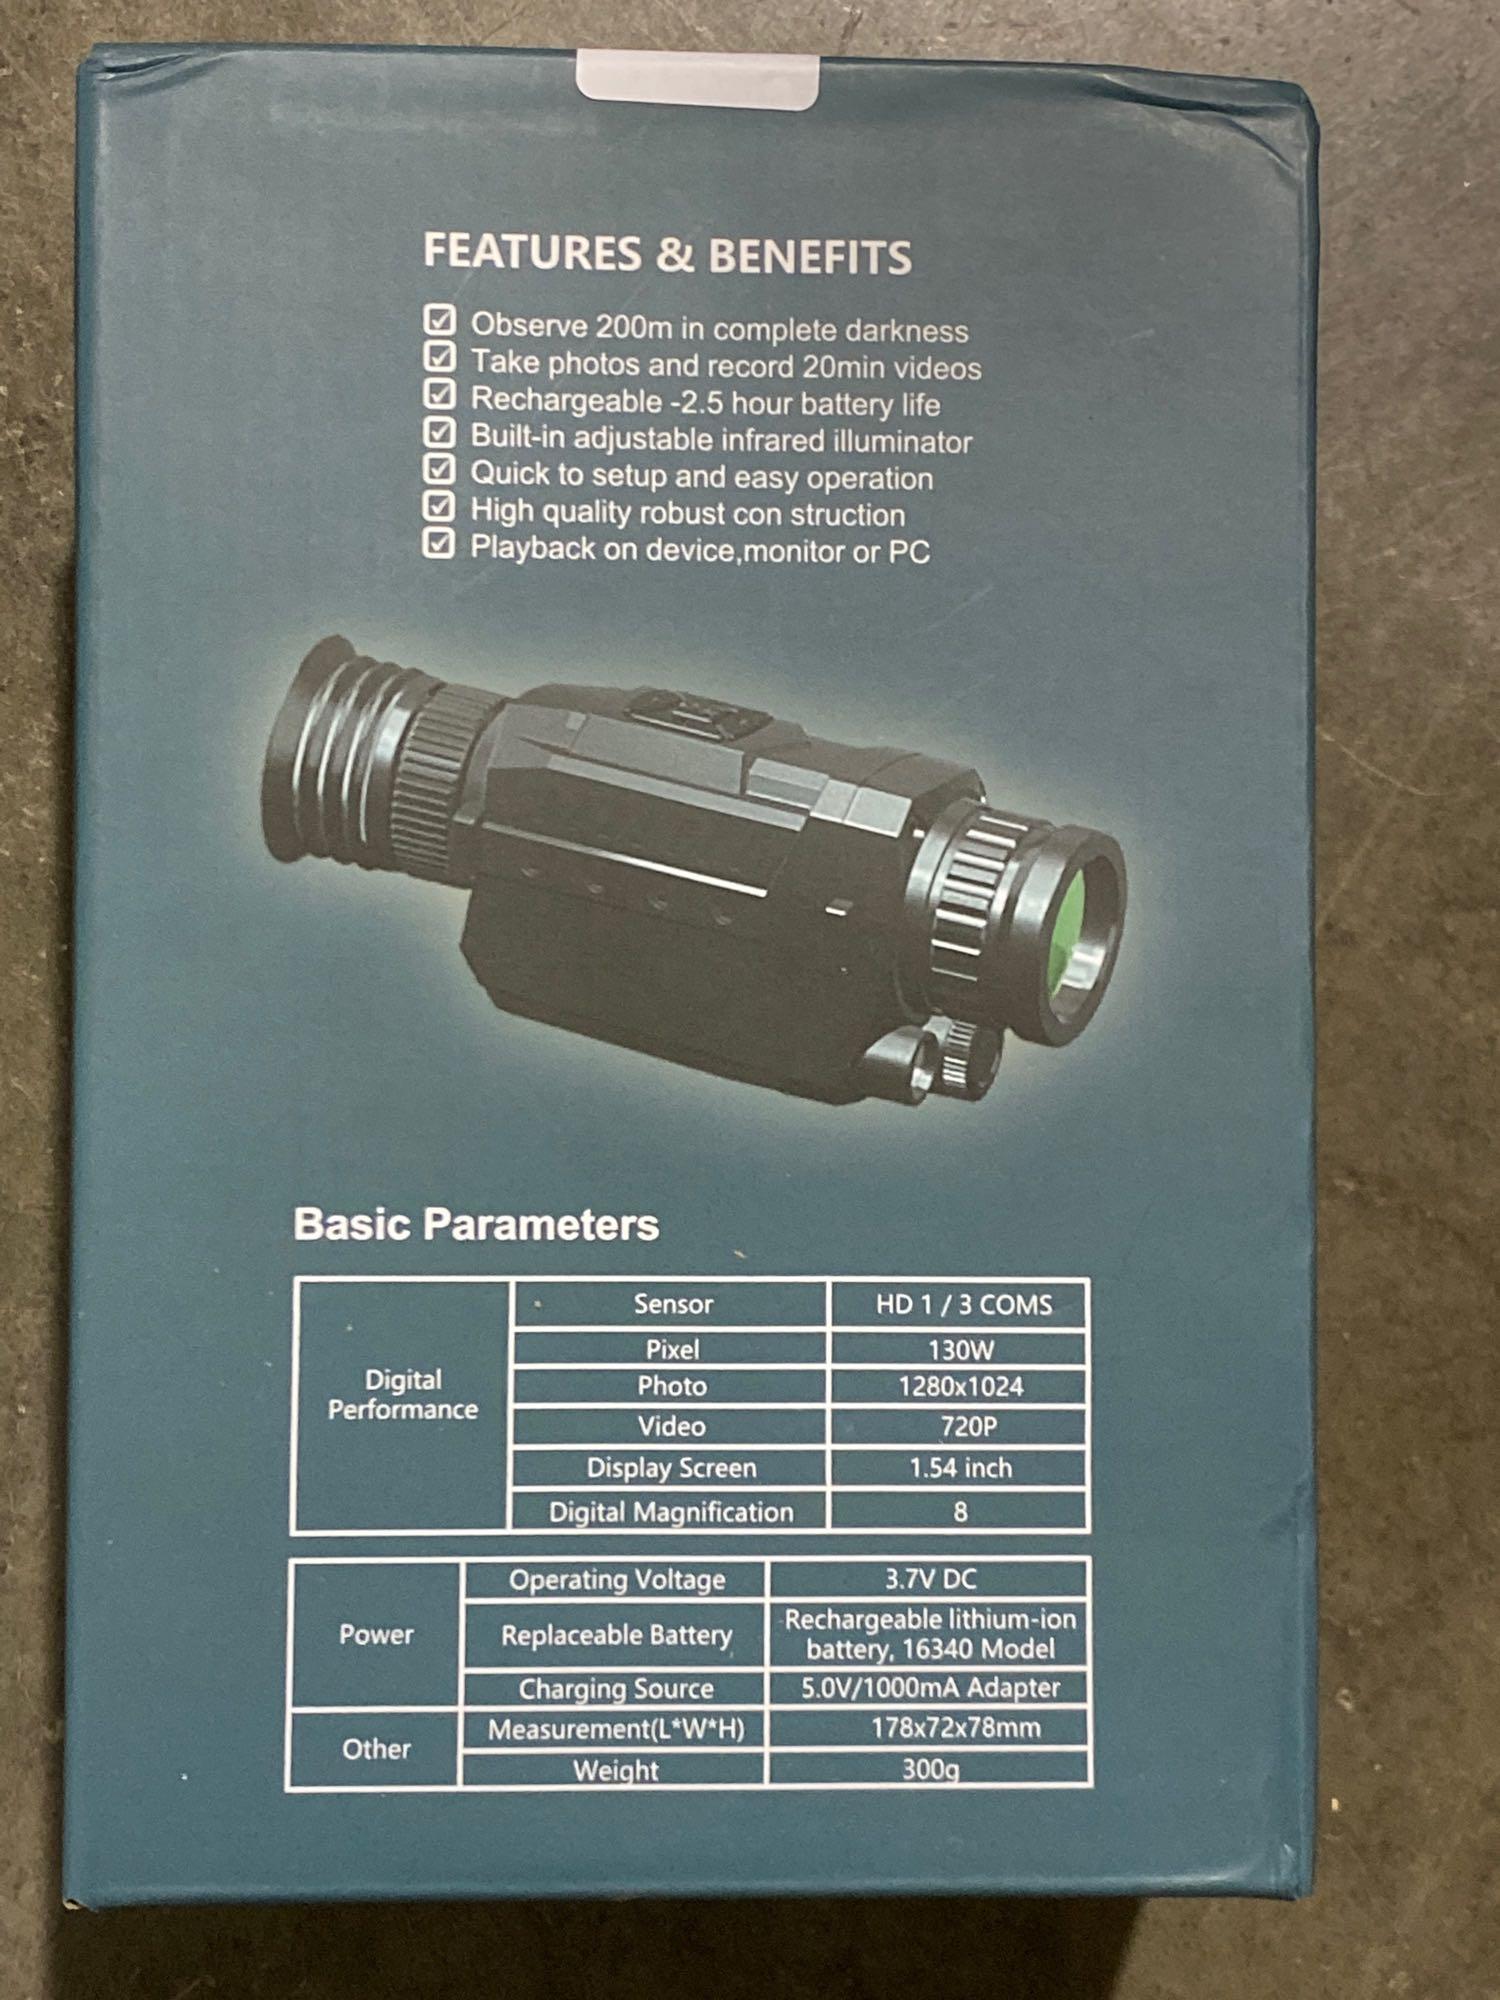 NV0535 Night Vision 5X Infrared Digital Camera Video 200m Range Monocular Scope, $249.99 (BRAND NEW)